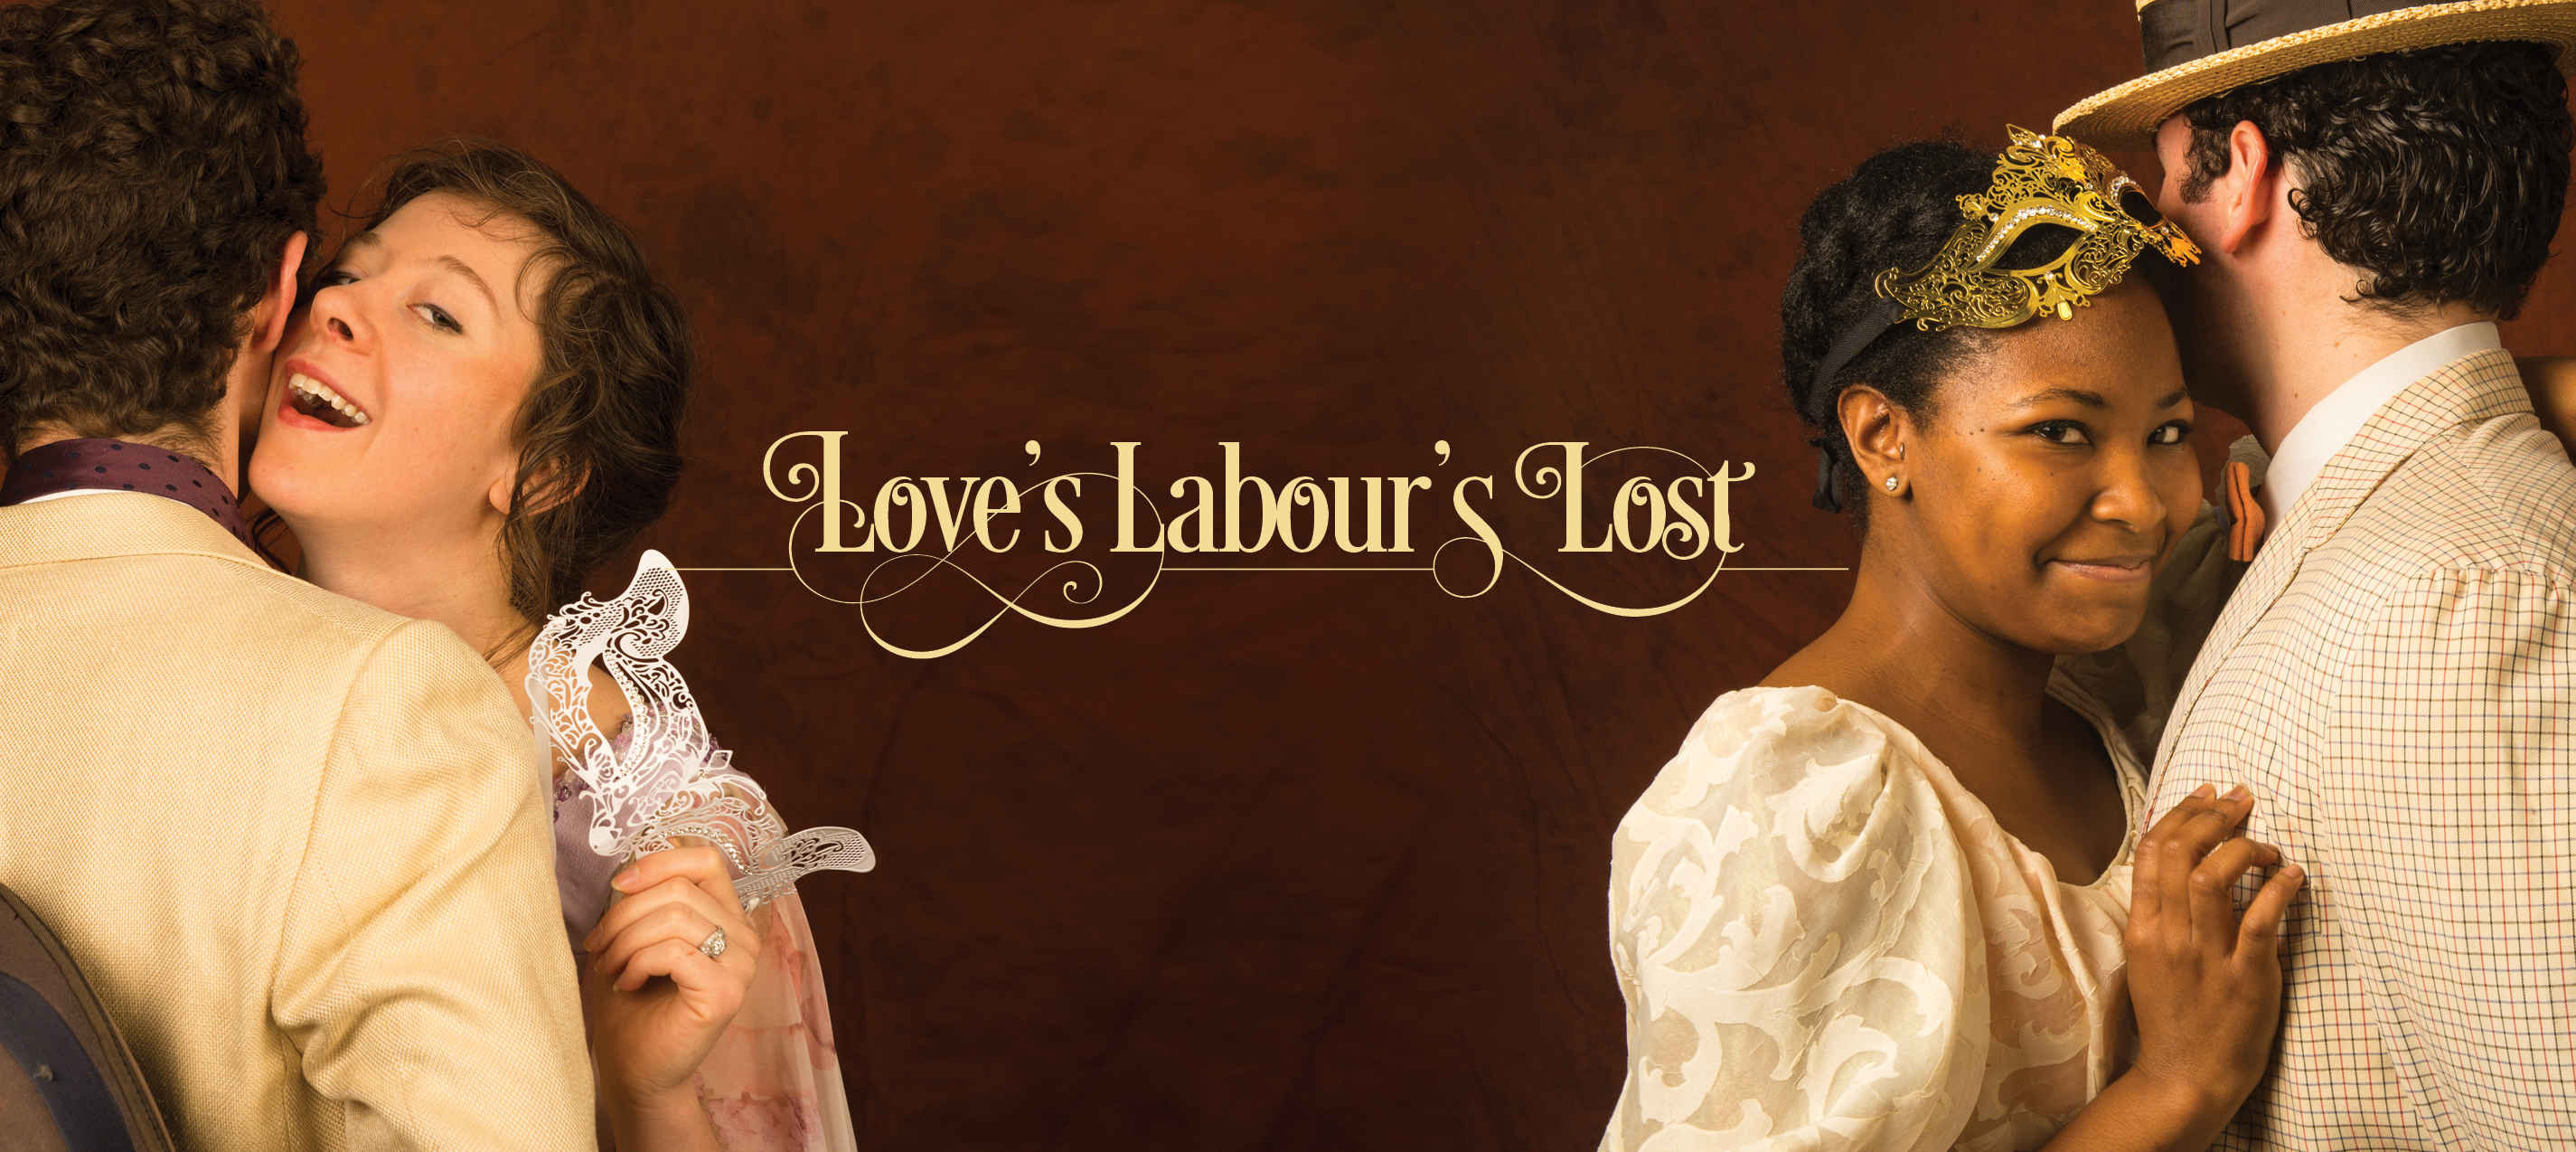 Love's Labour's Lost banner